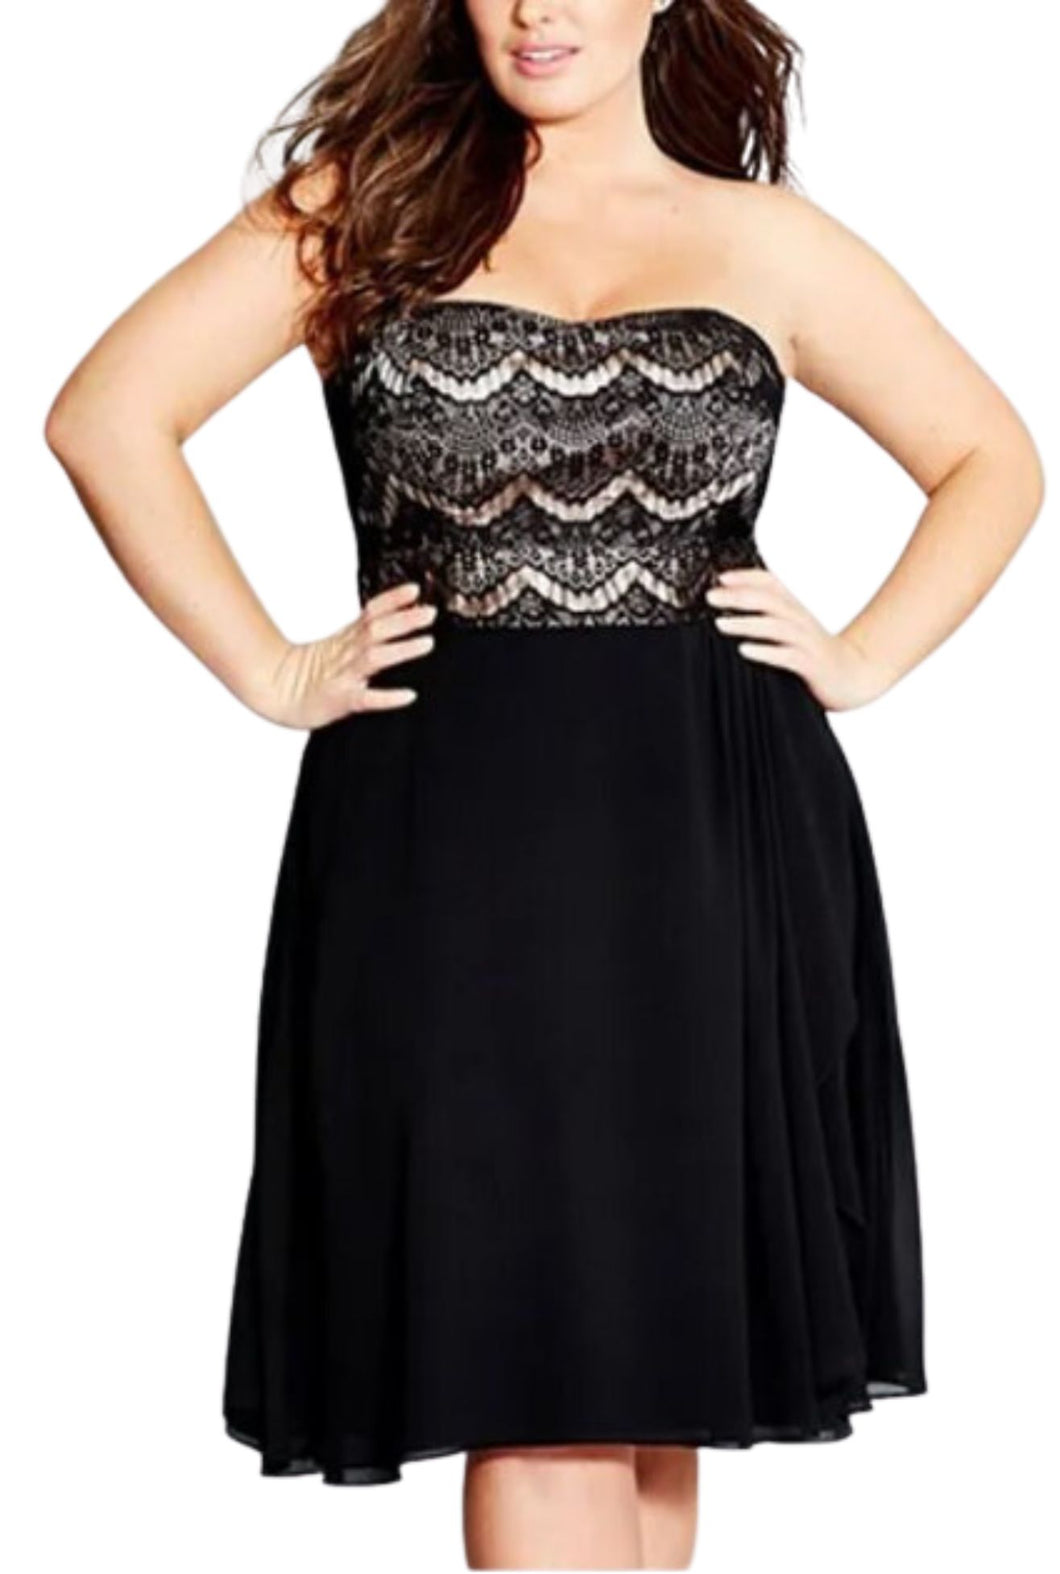 City Chic Strapless Black Lace Dress, Size XL